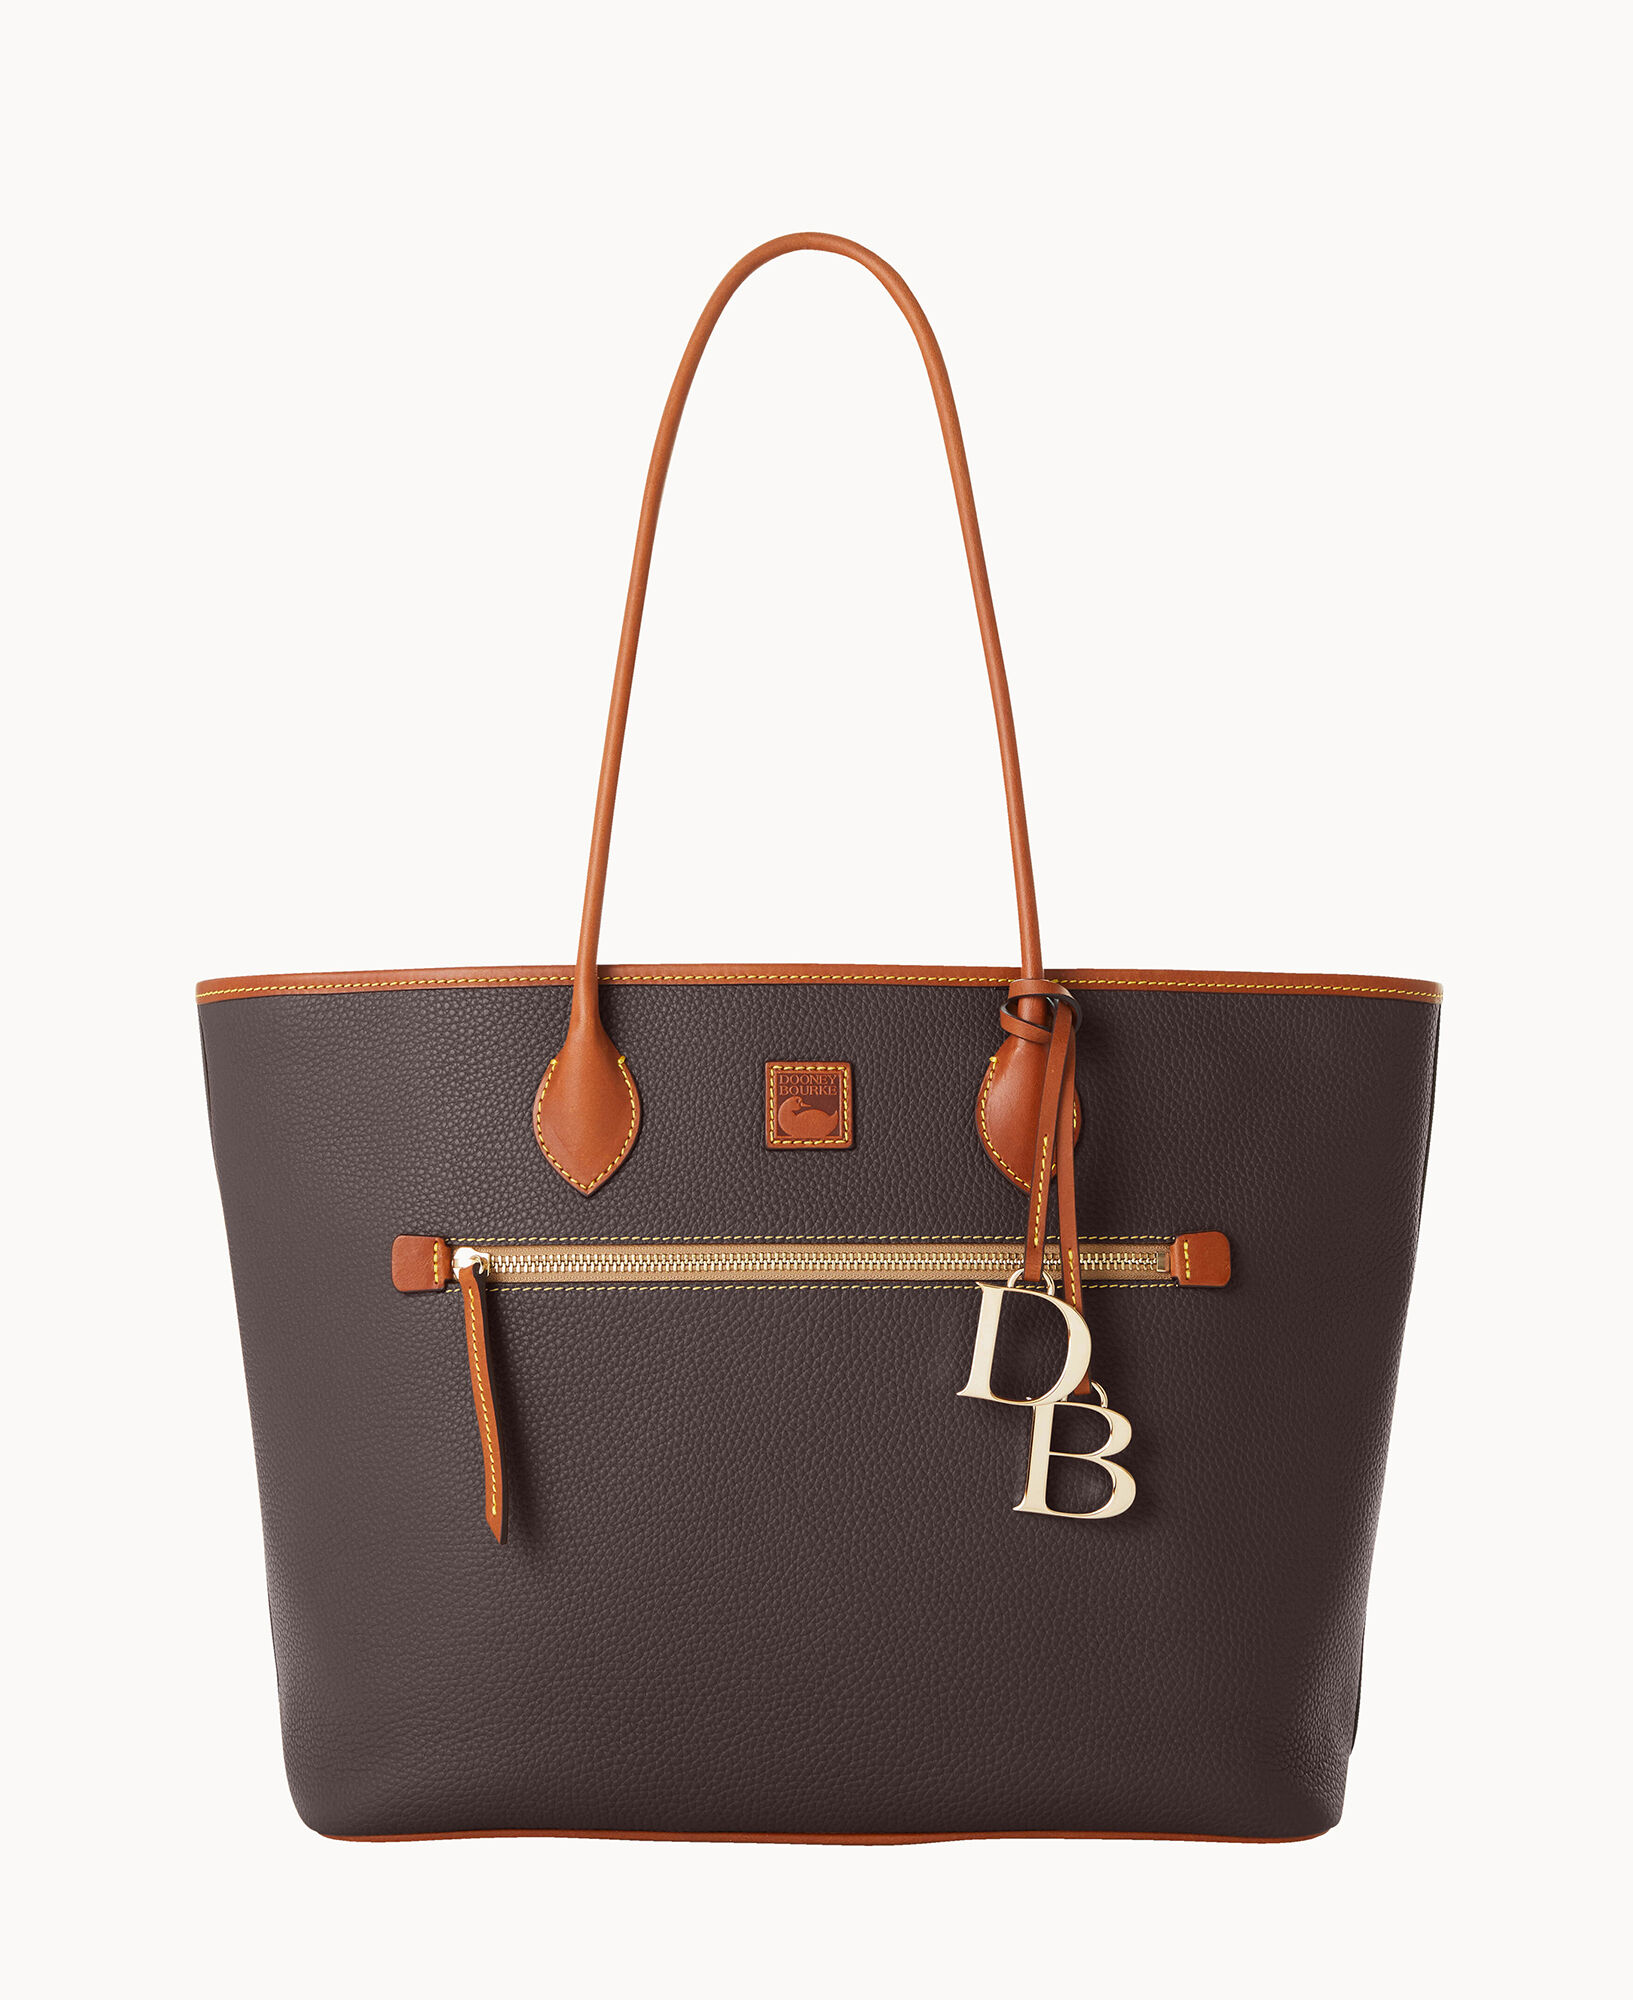 Dooney Bourke Leather/ Fabric DB Signature Logo Tote Shopper Tan Brown purse